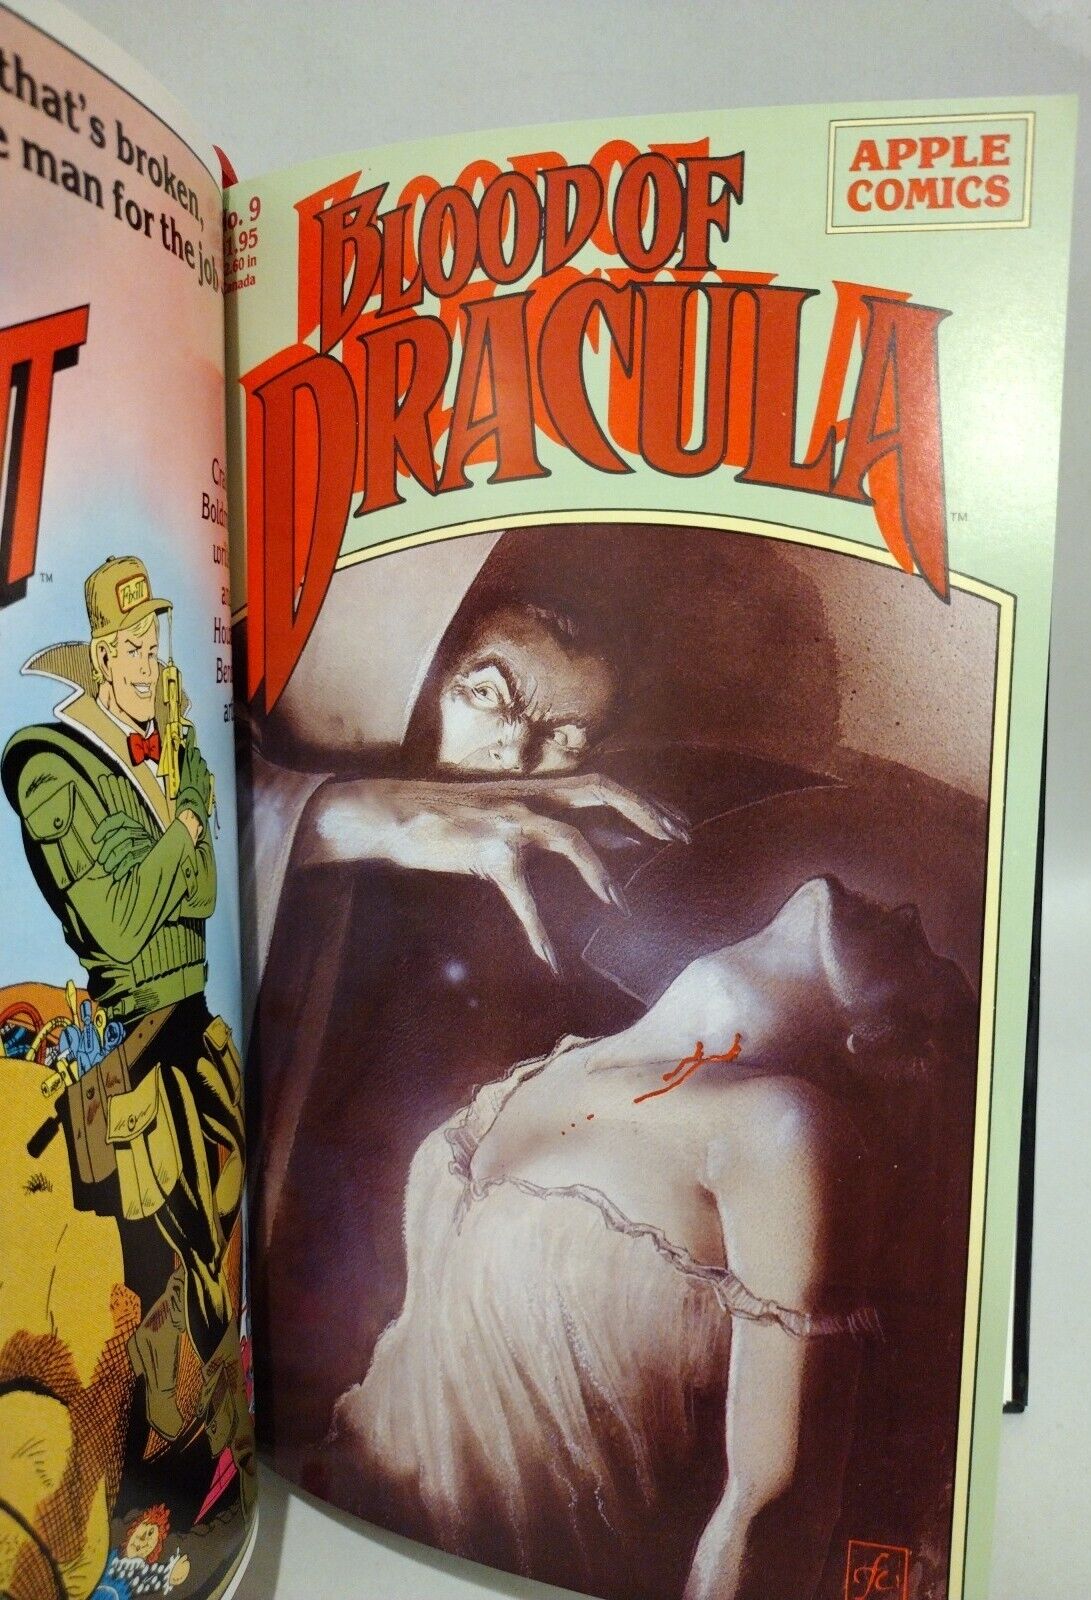 Blood of Dracula Omnibus (1987) ARG Custom Bound Apple Comic HC Kieth Wrightson